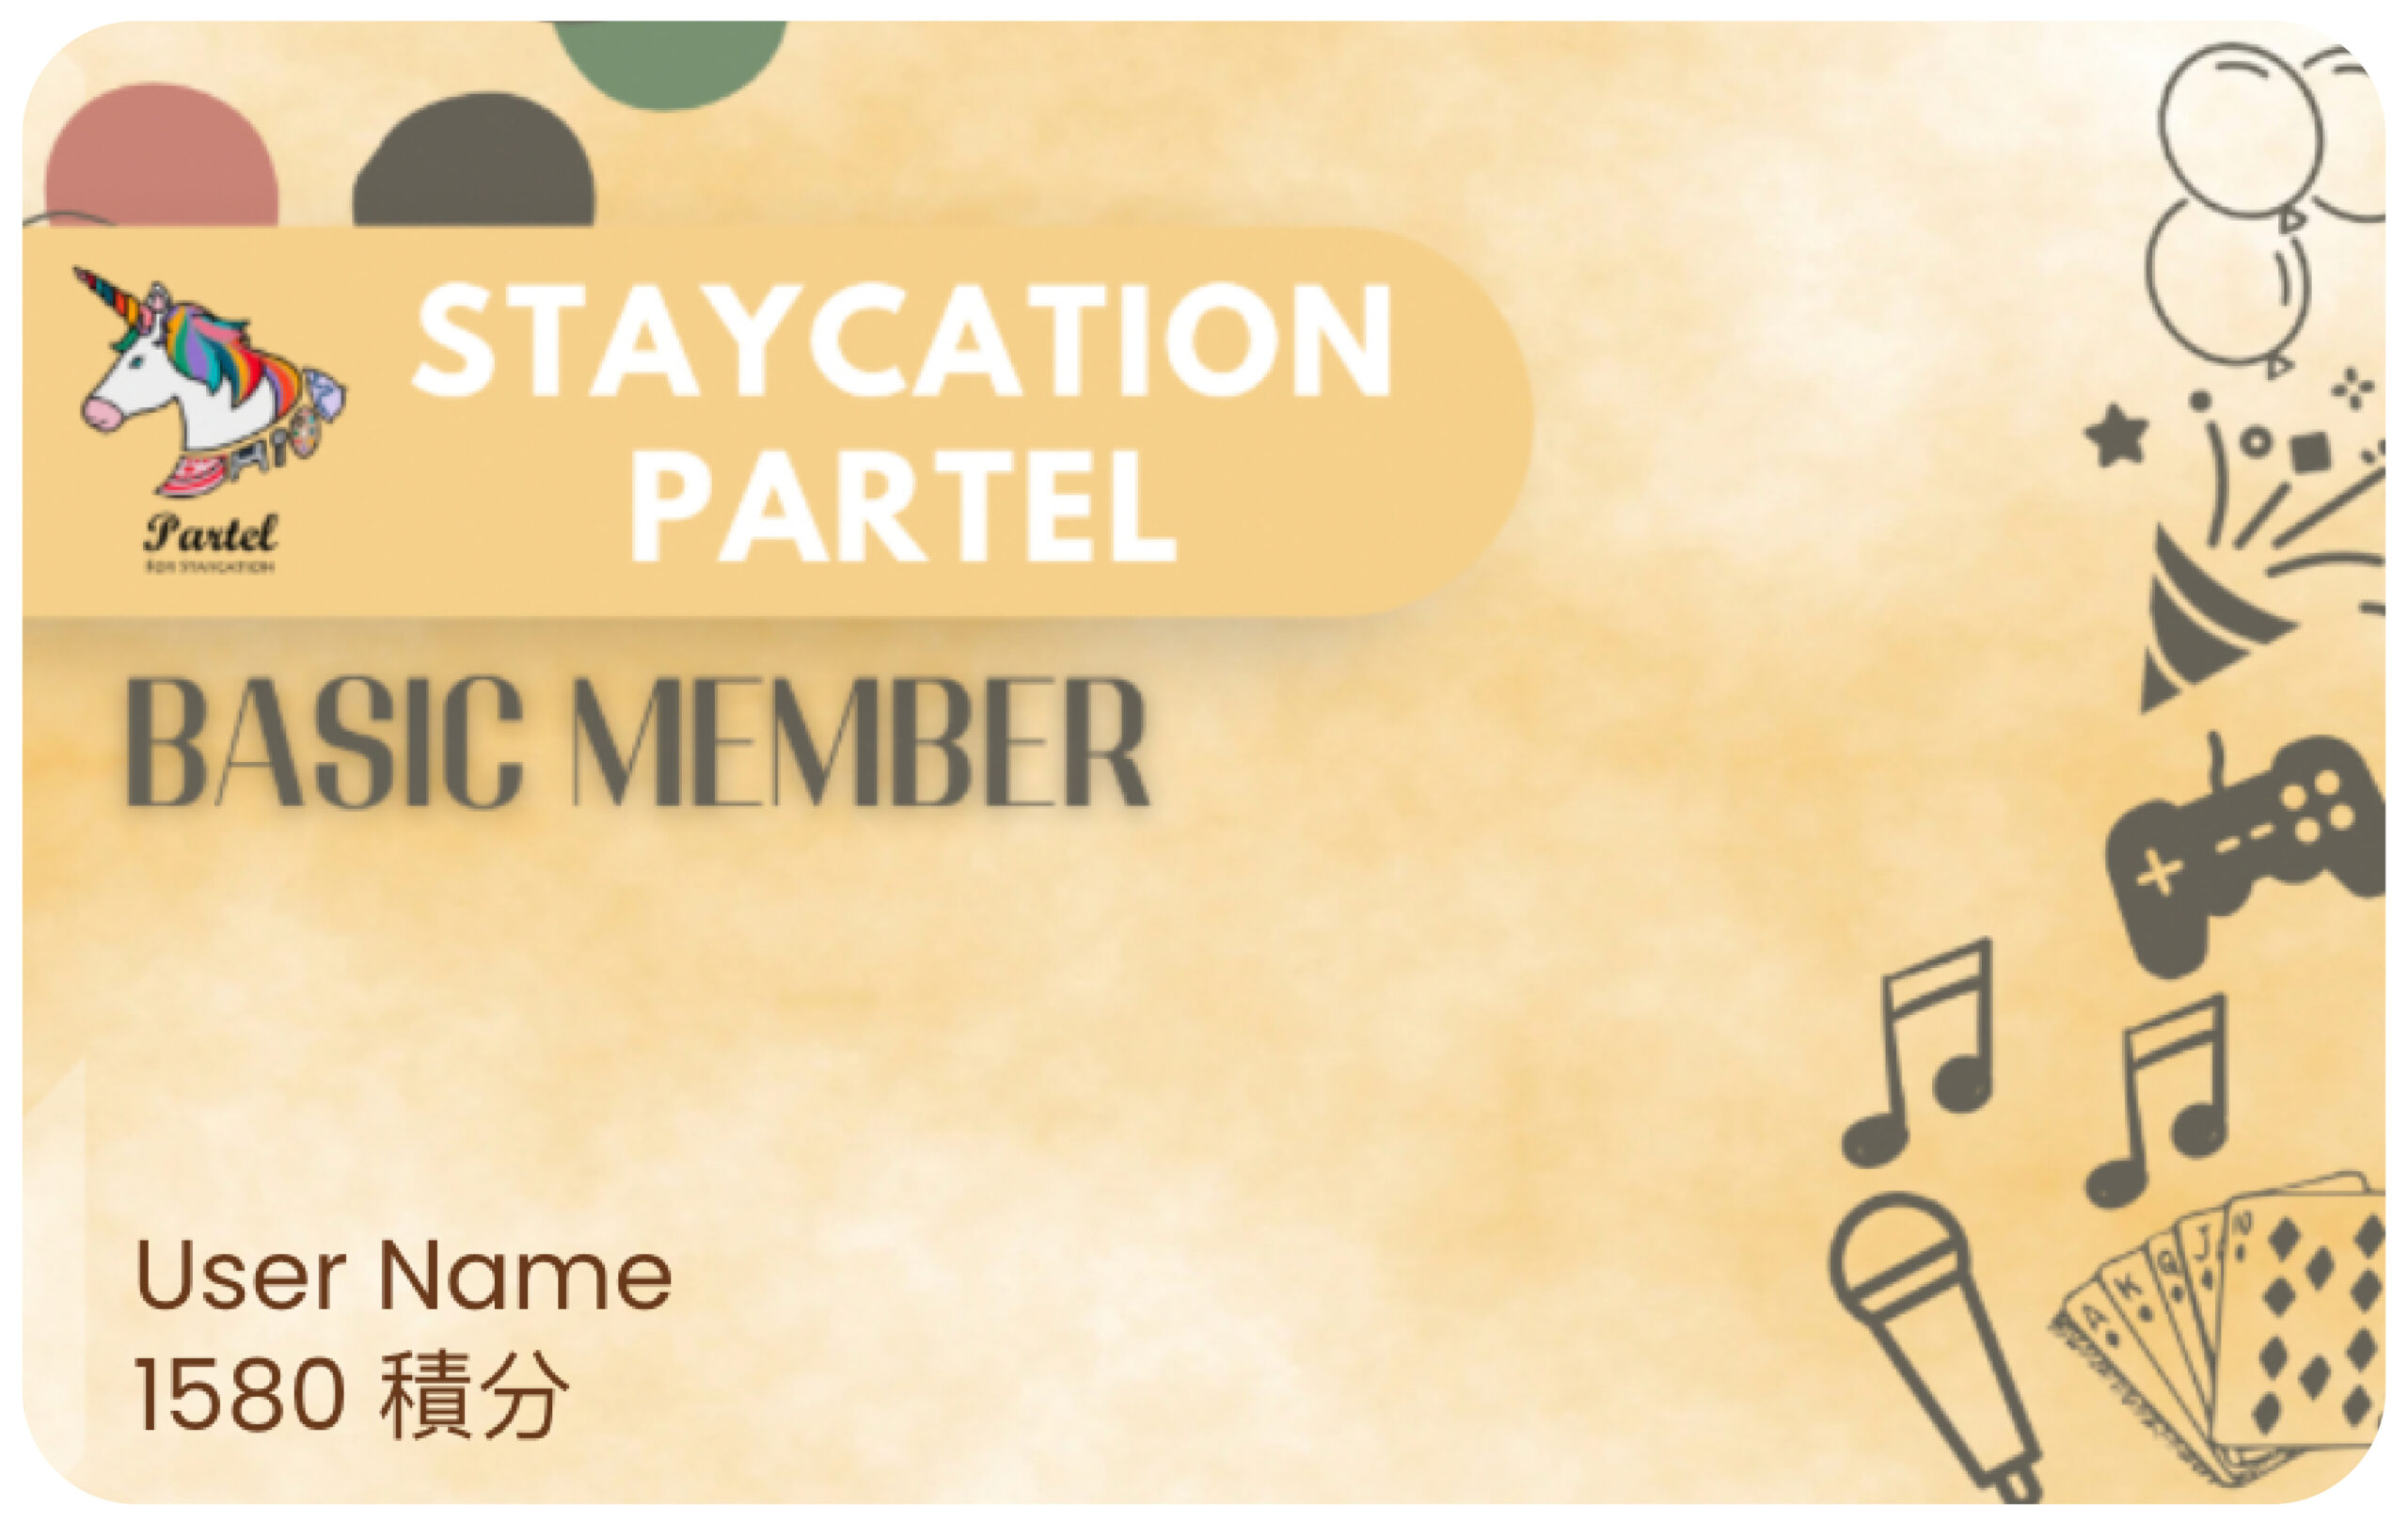 Partel_Member Card